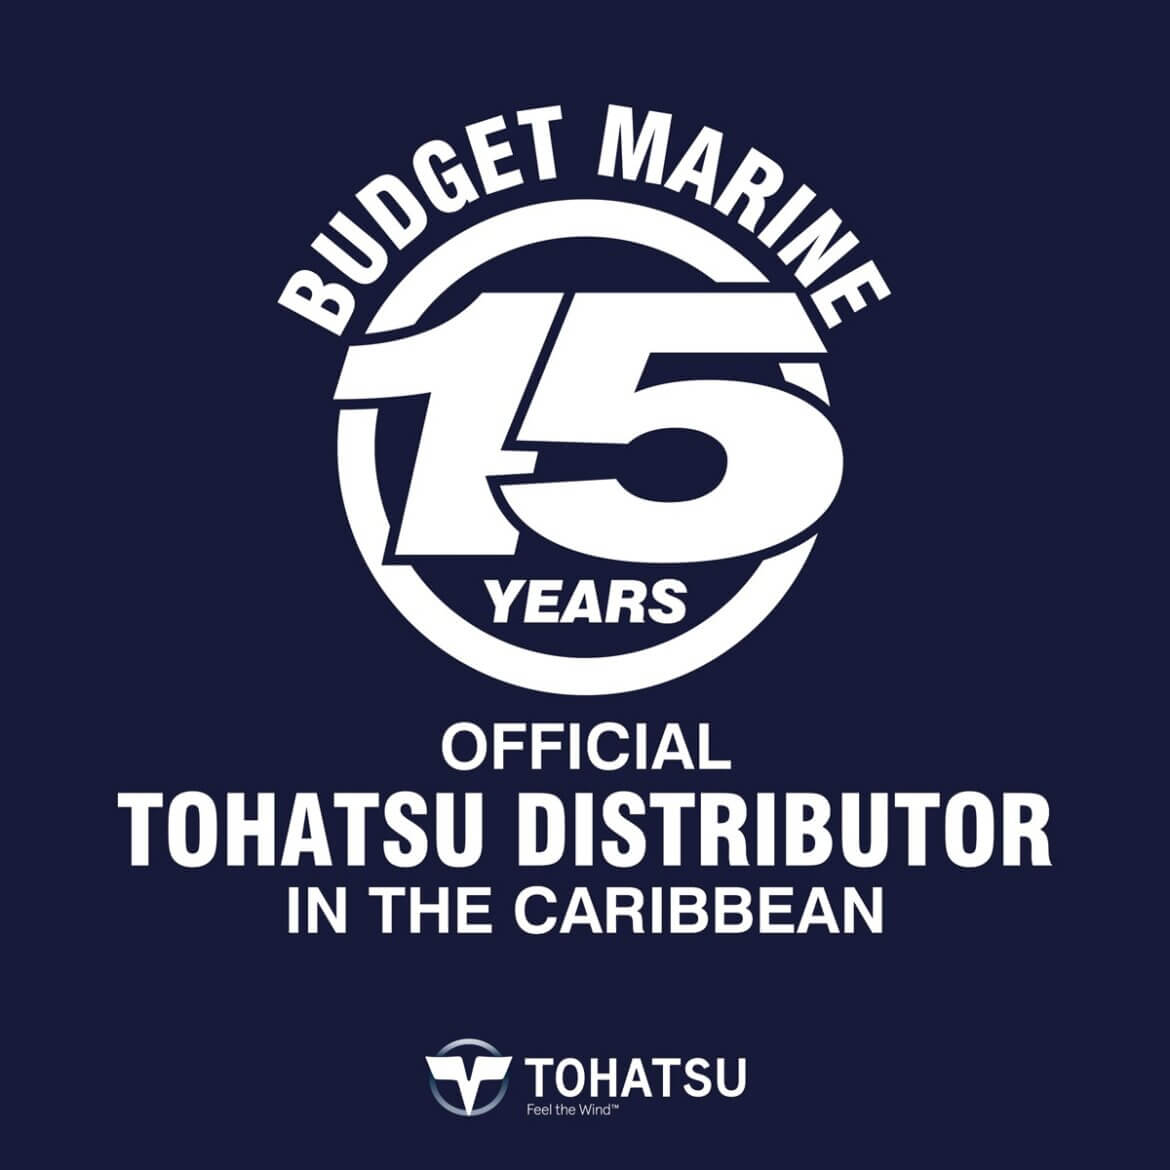 Budget Marine Trinidad 4